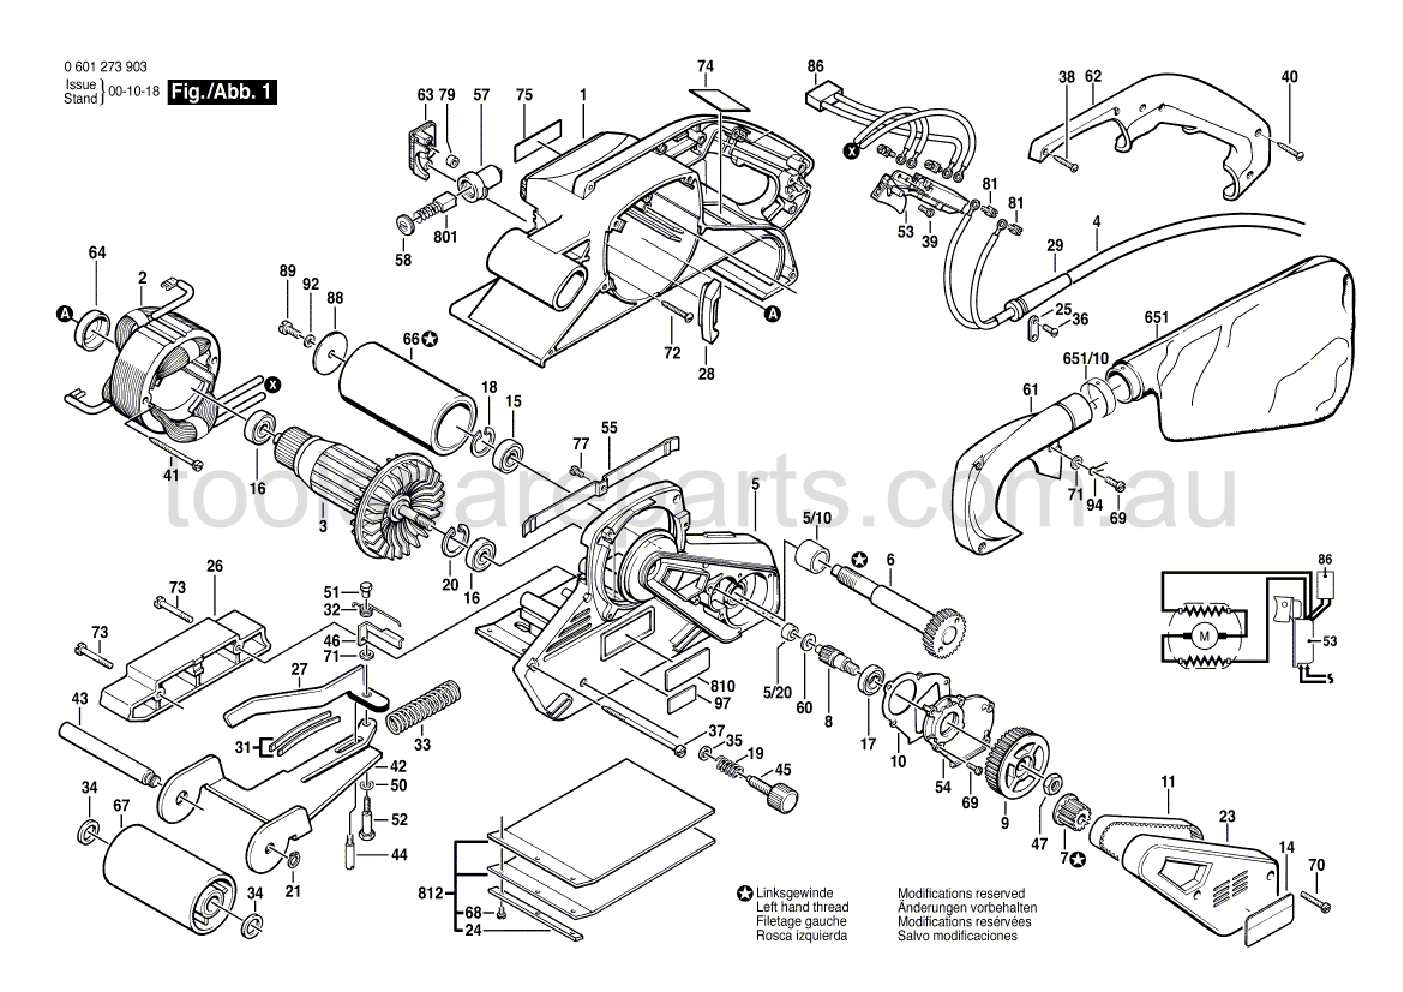 Bosch GBS 100 A 0601273937  Diagram 1